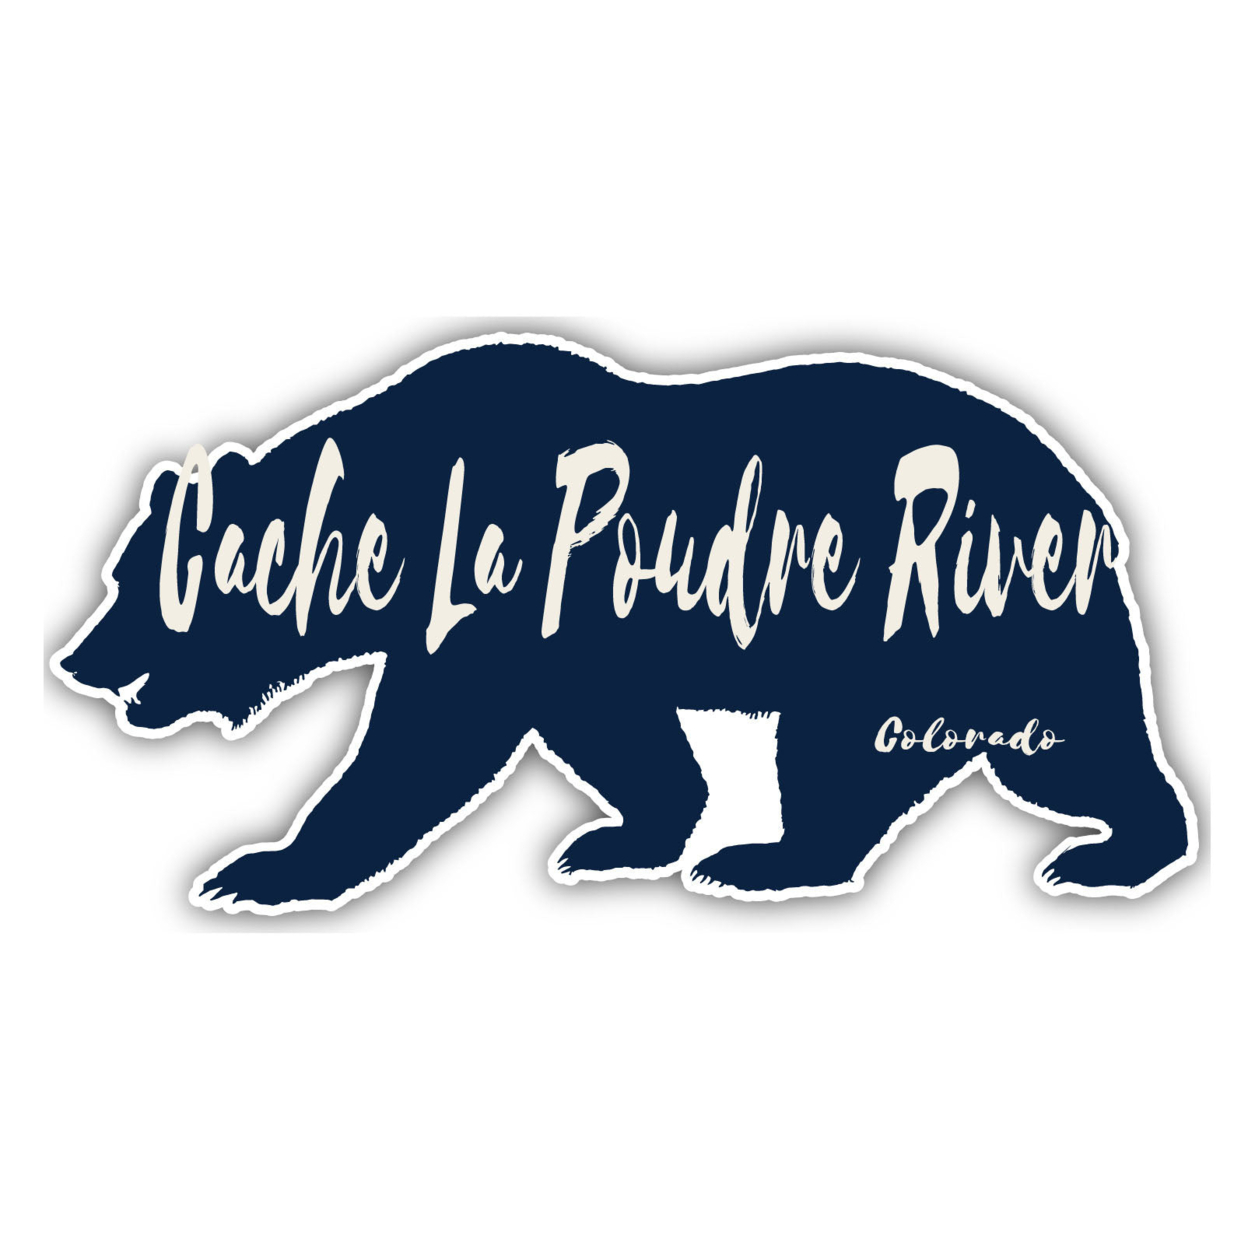 Cache La Poudre River Colorado Souvenir Decorative Stickers (Choose Theme And Size) - Single Unit, 10-Inch, Bear